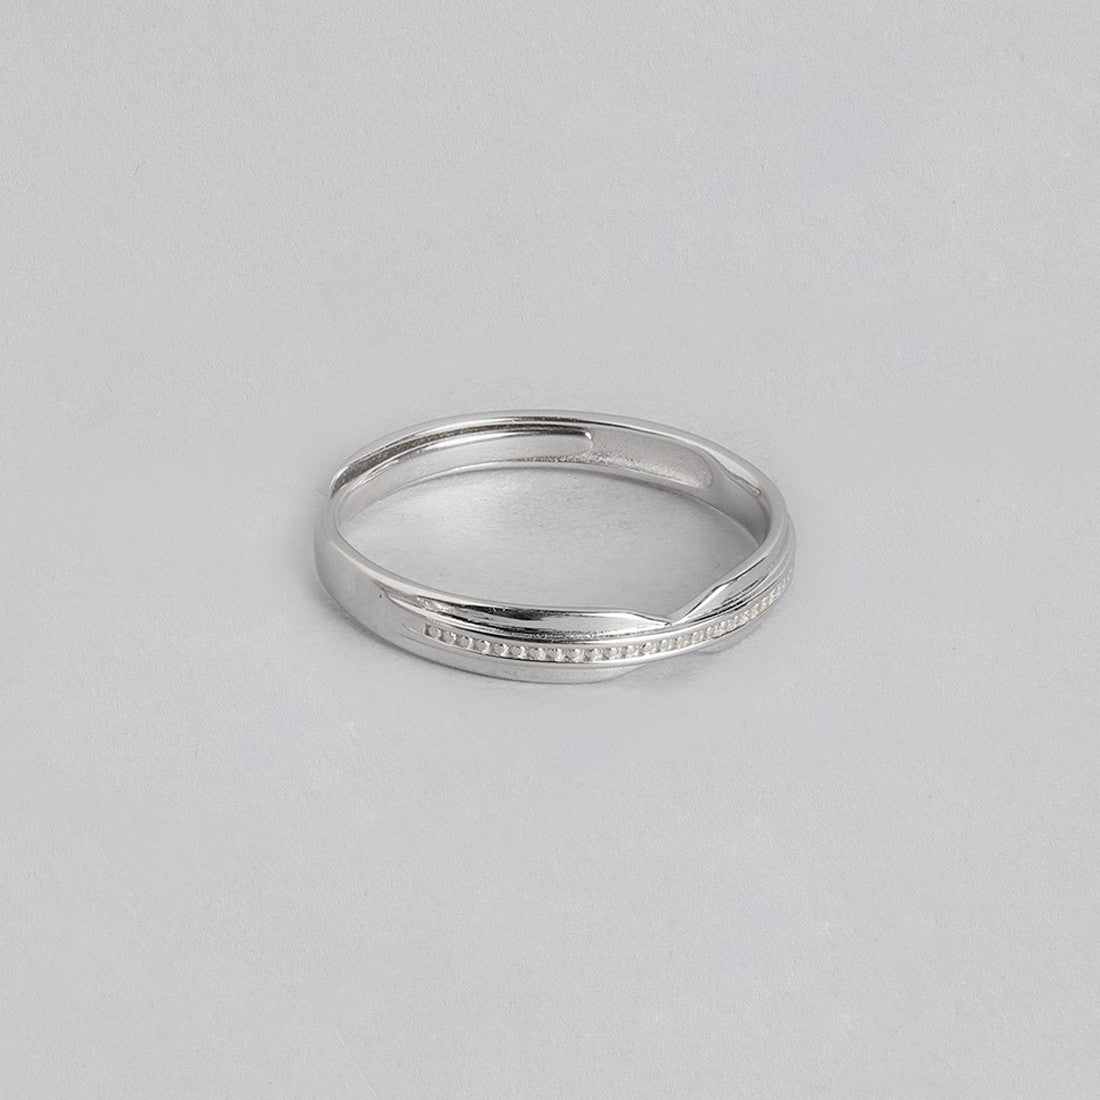 Elegant and Sleek 925 Sterling Silver Silver Ring For Him (Adjustable)